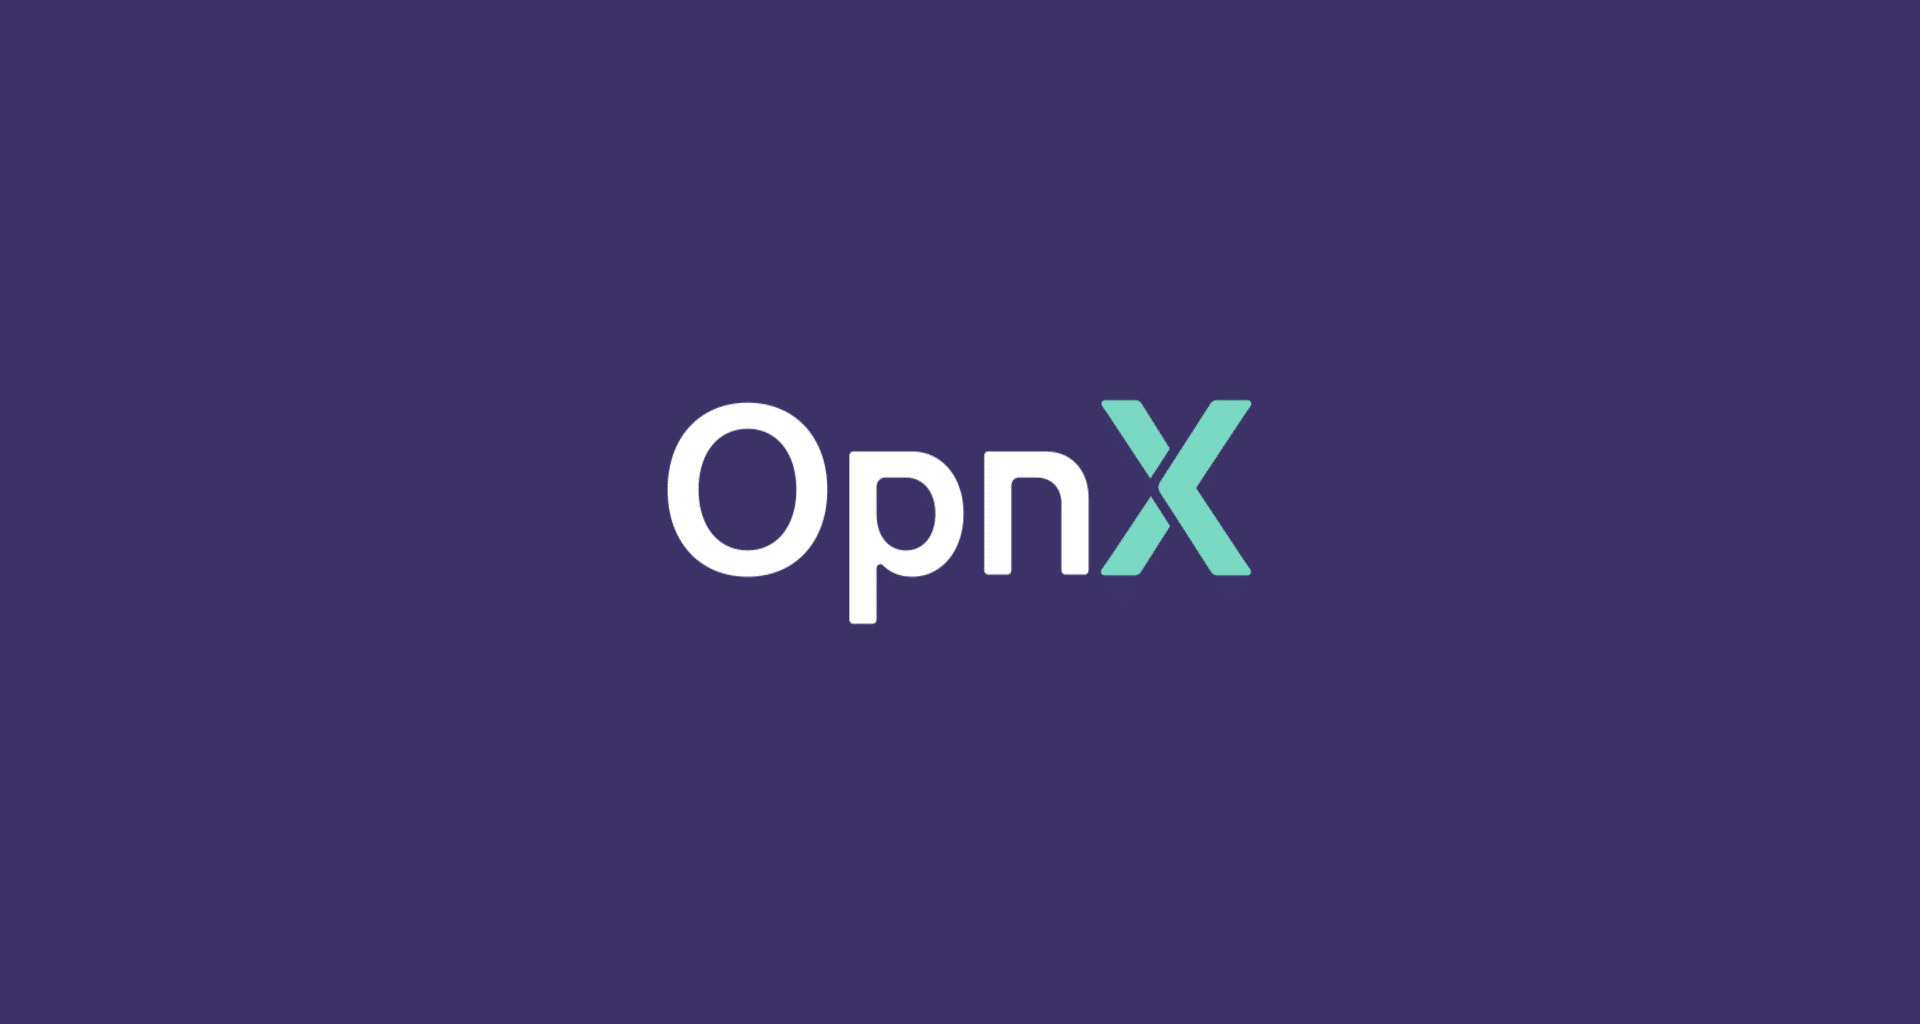 OPNX trading crypto